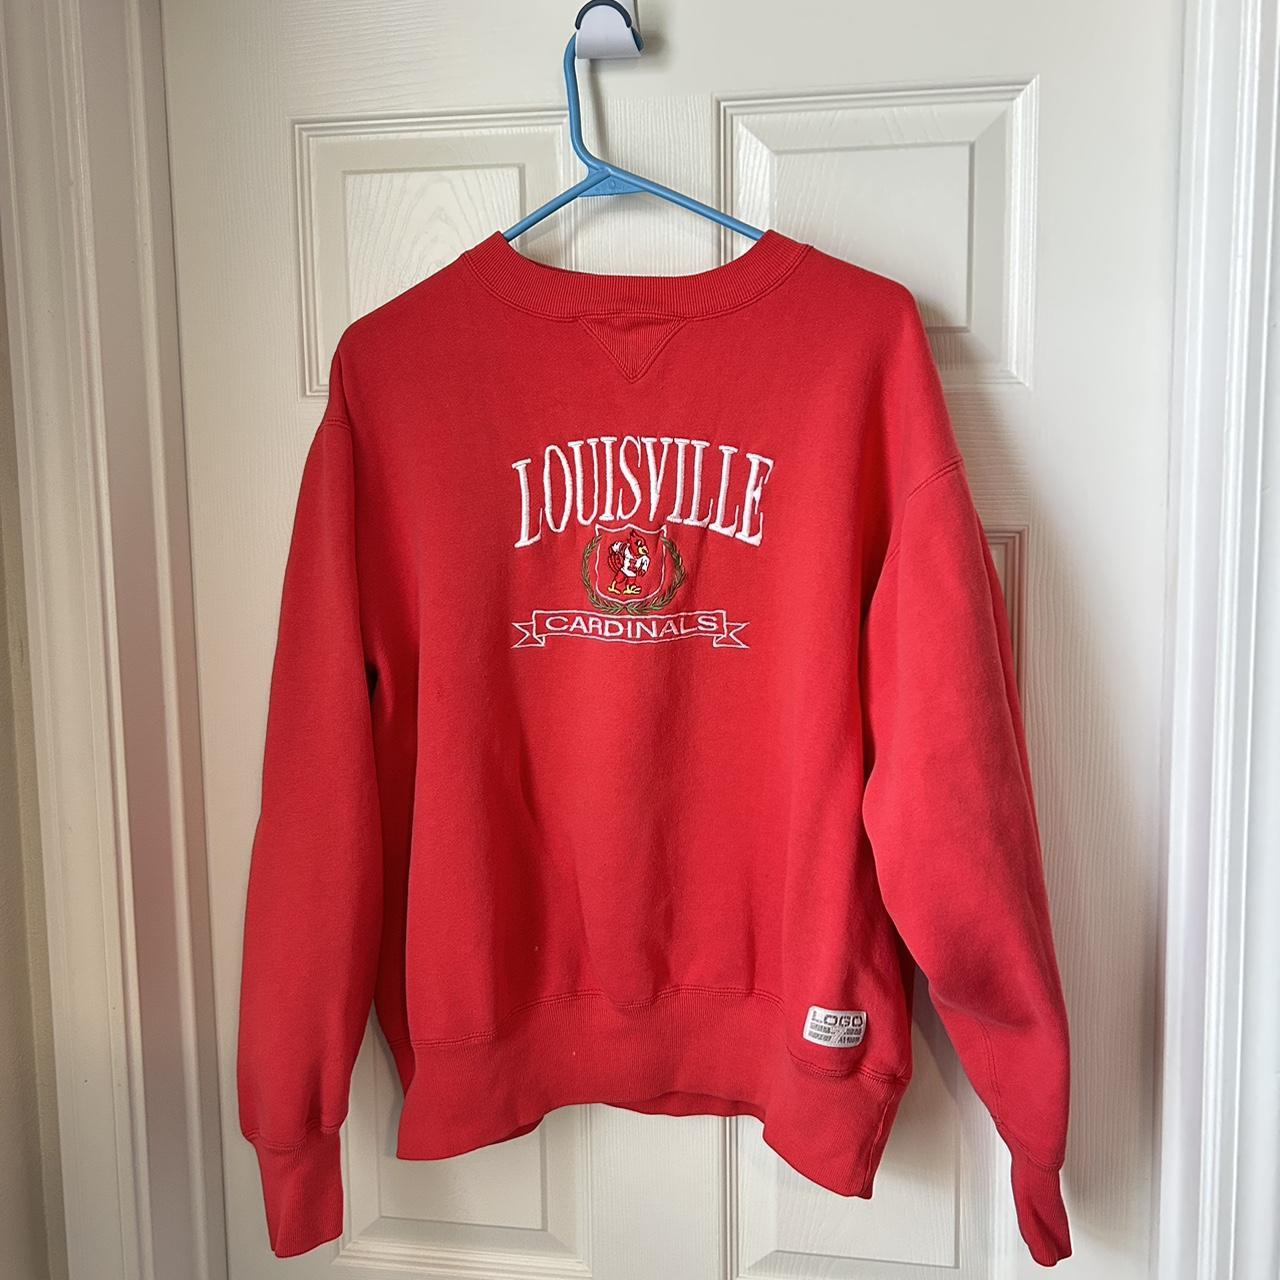 red louisville sweatshirt